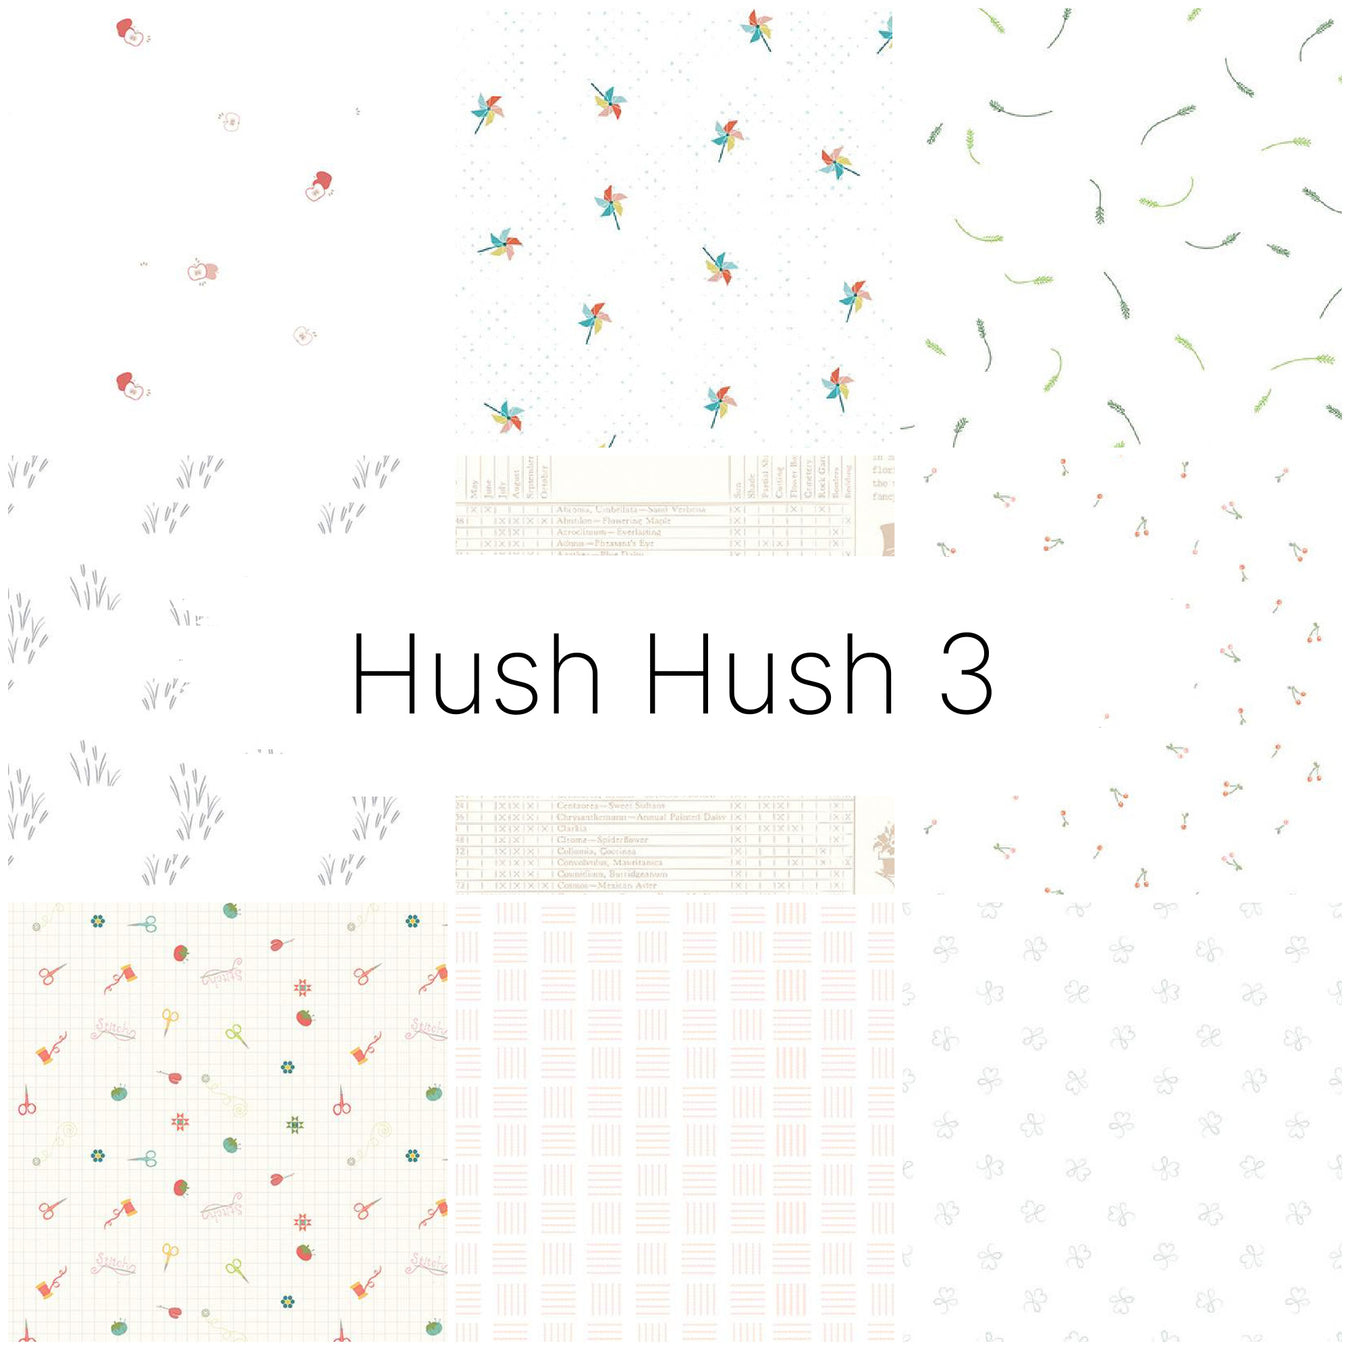 Hush Hush 3